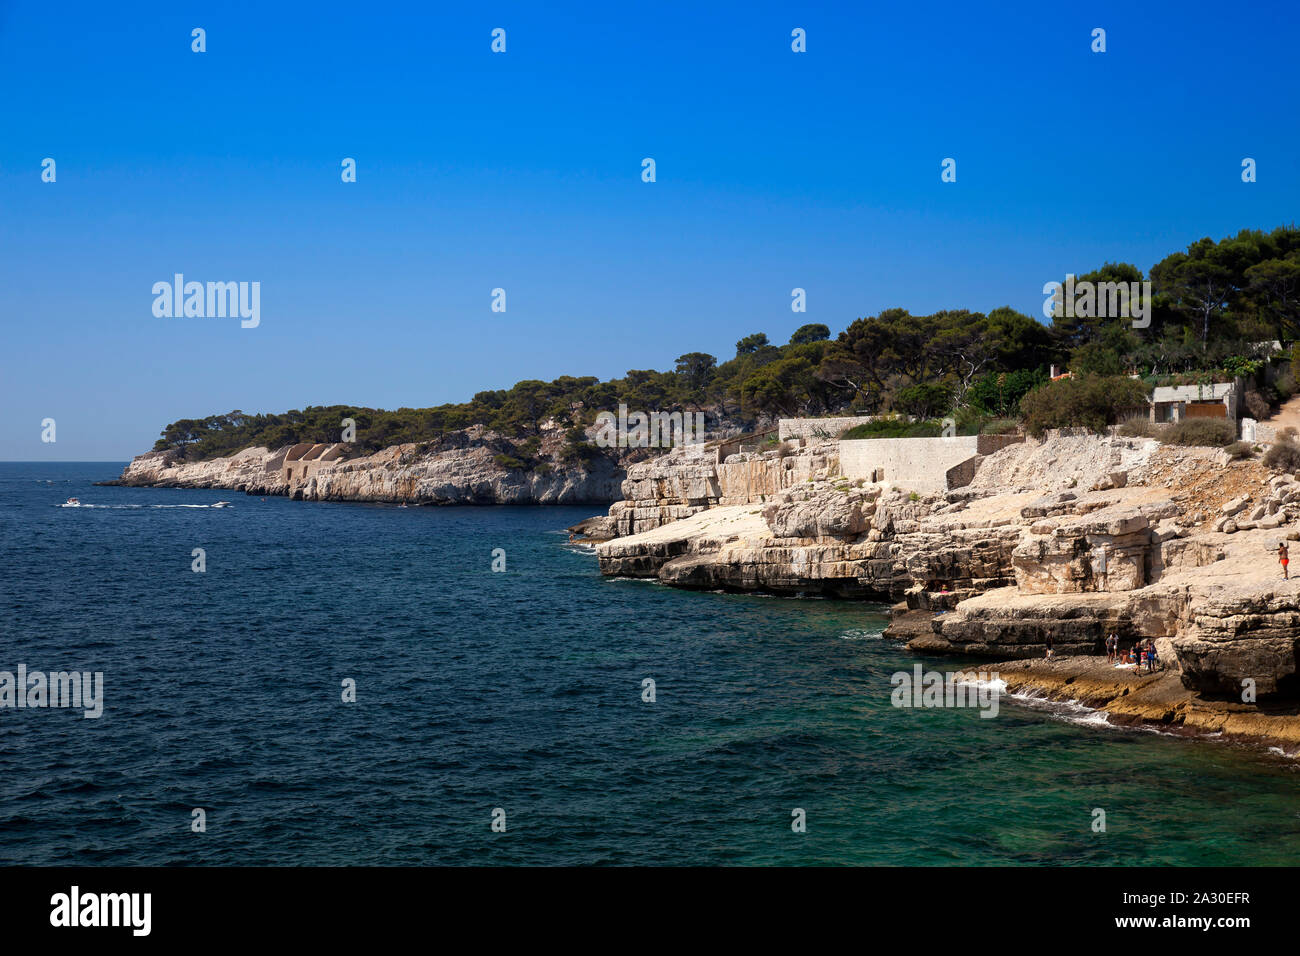 Menschen baden an der Felsenküste Calanque de Port Pin, Provence, Frankreich, Europa| People swim at the rocky coast Calanque de Port Pin, Provence, F Stock Photo